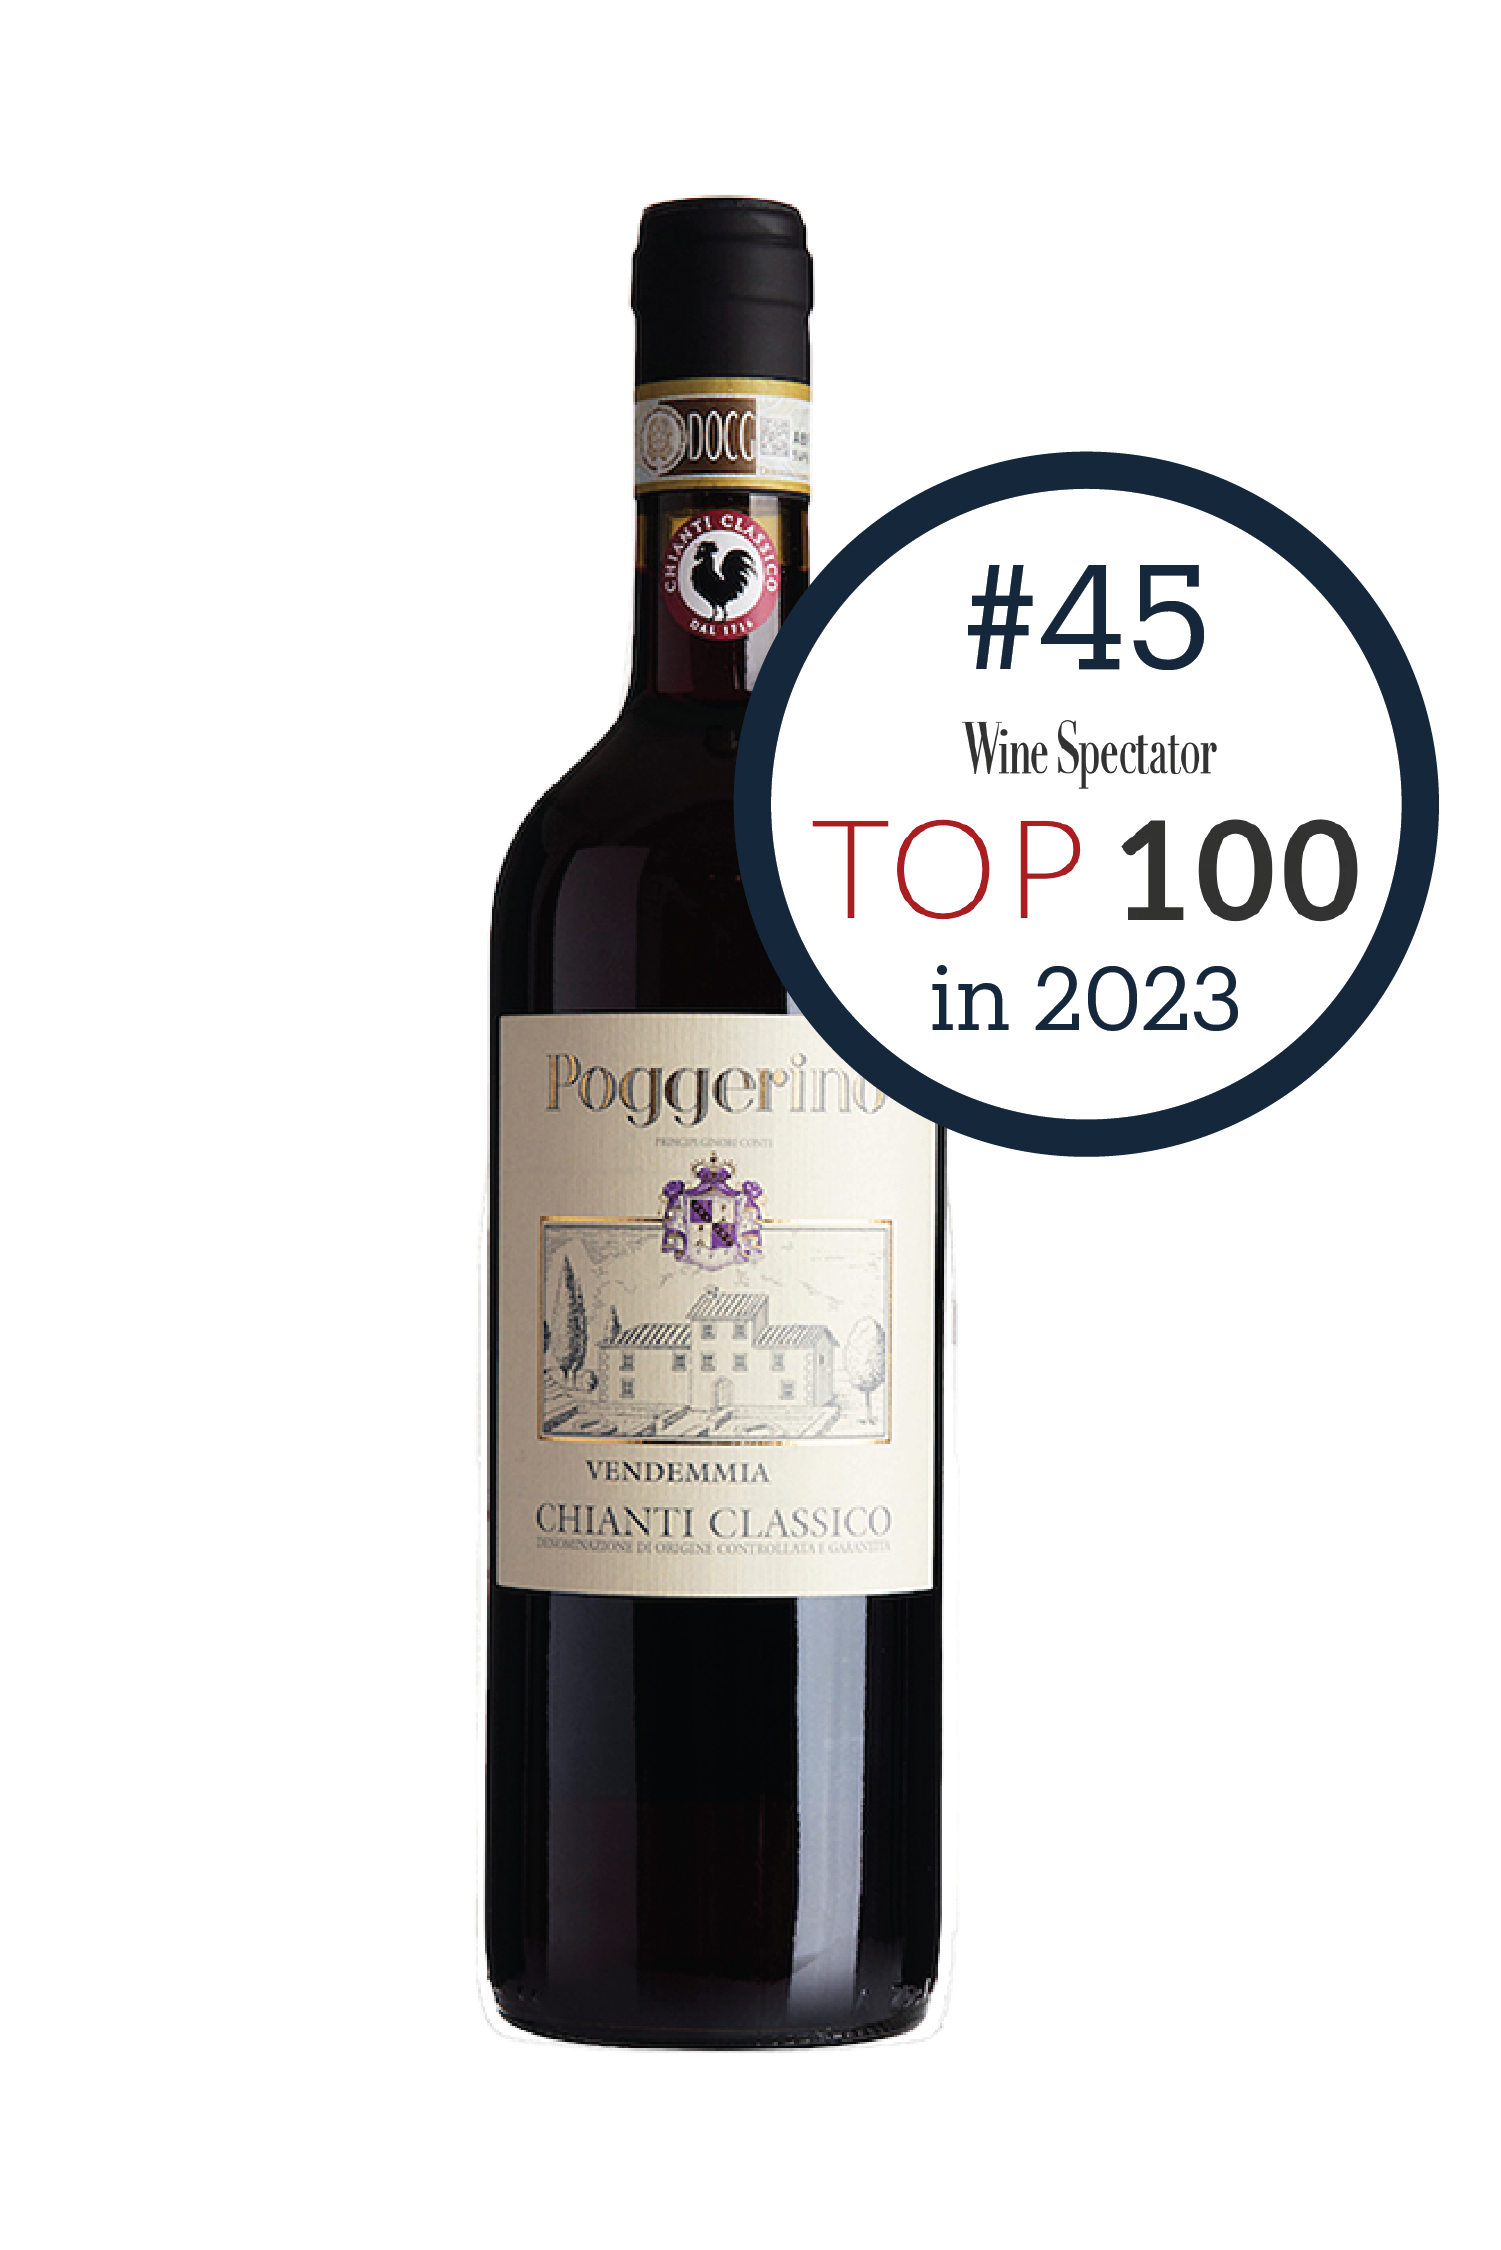 Blog 3_Top 100 WS_bottle image_Poggerino 2023